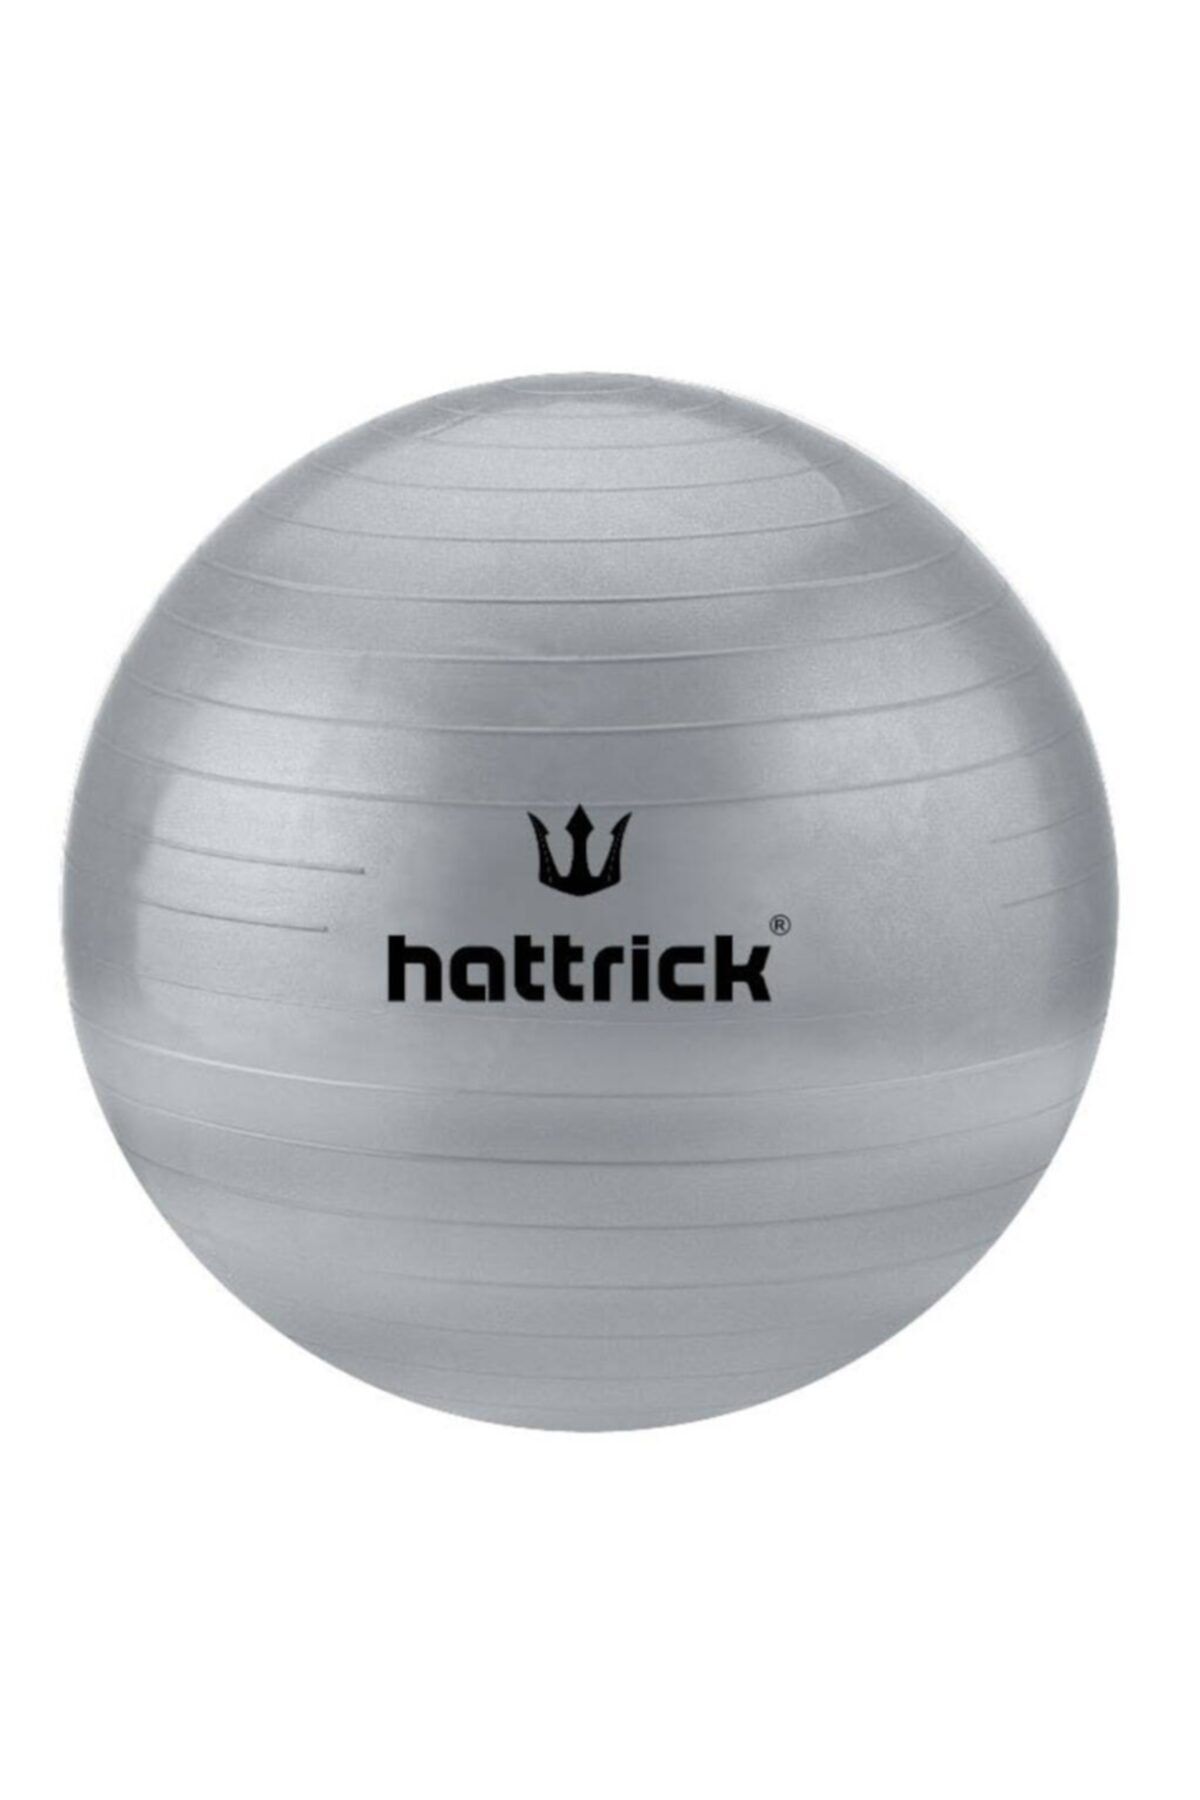 Hattrick Gri Hb 75 Cm Pilates Topu